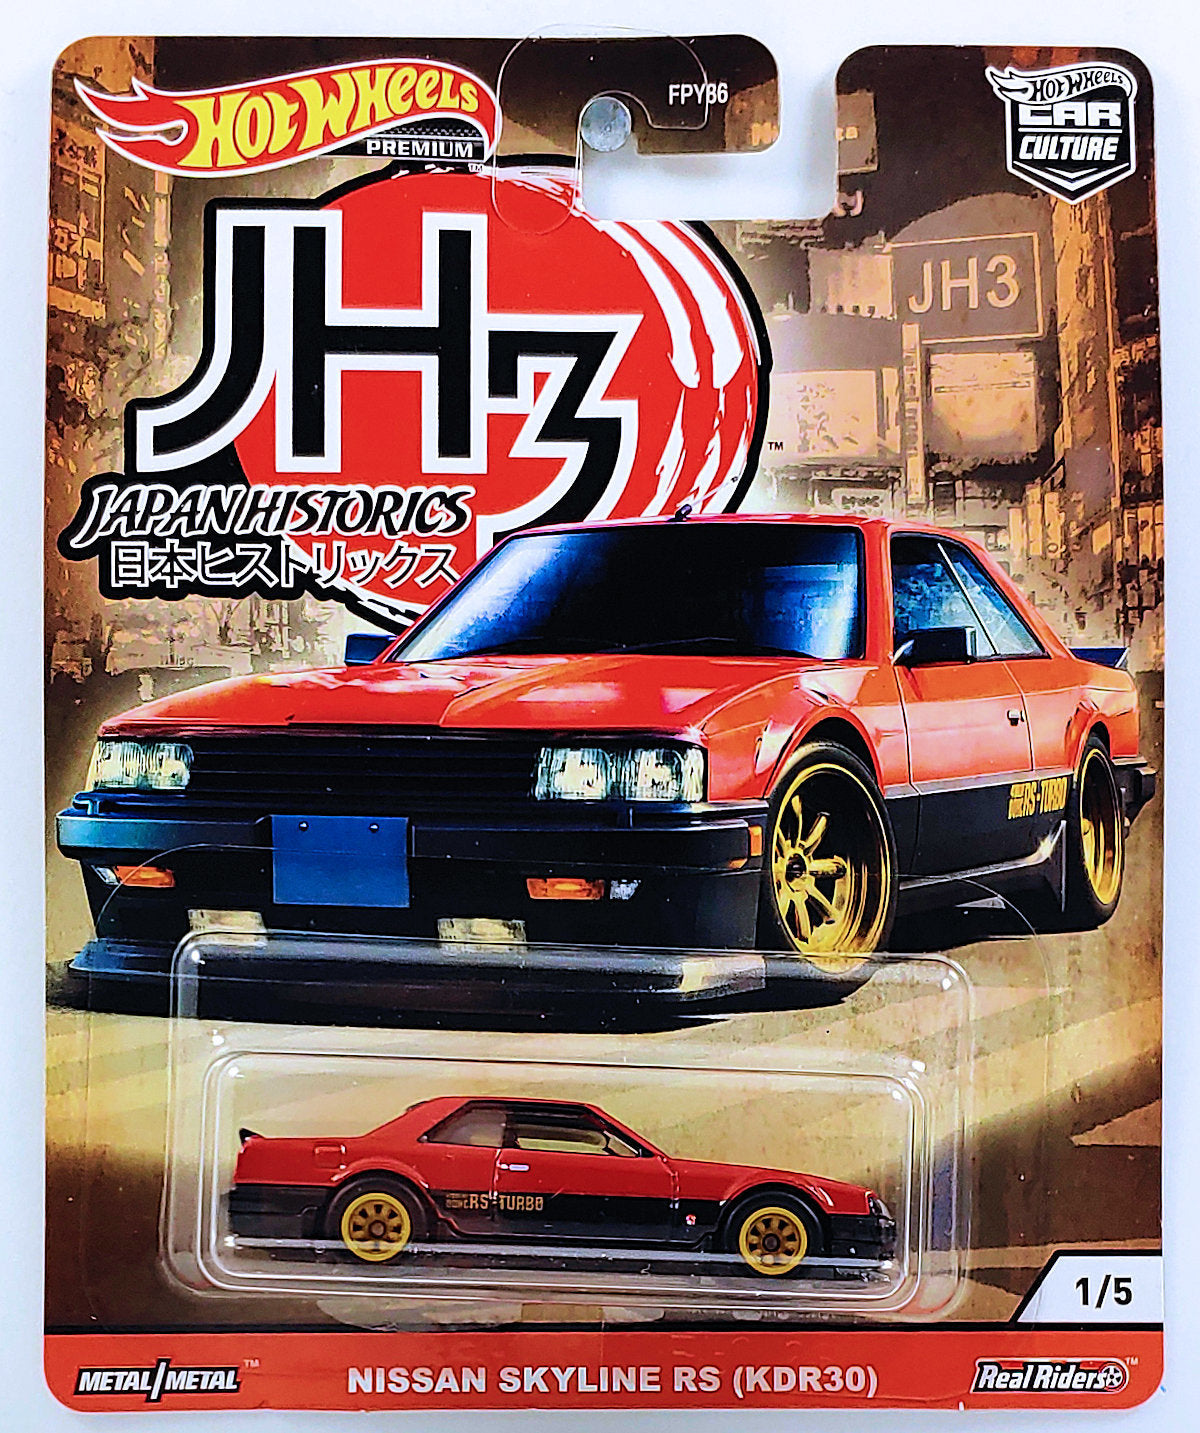 Hot Wheels 2020 - Car Culture / Japan Historics 3 # 1/5 - Nissan Skyline RS (KDR30) - Red - Metal/Metal & Real Riders